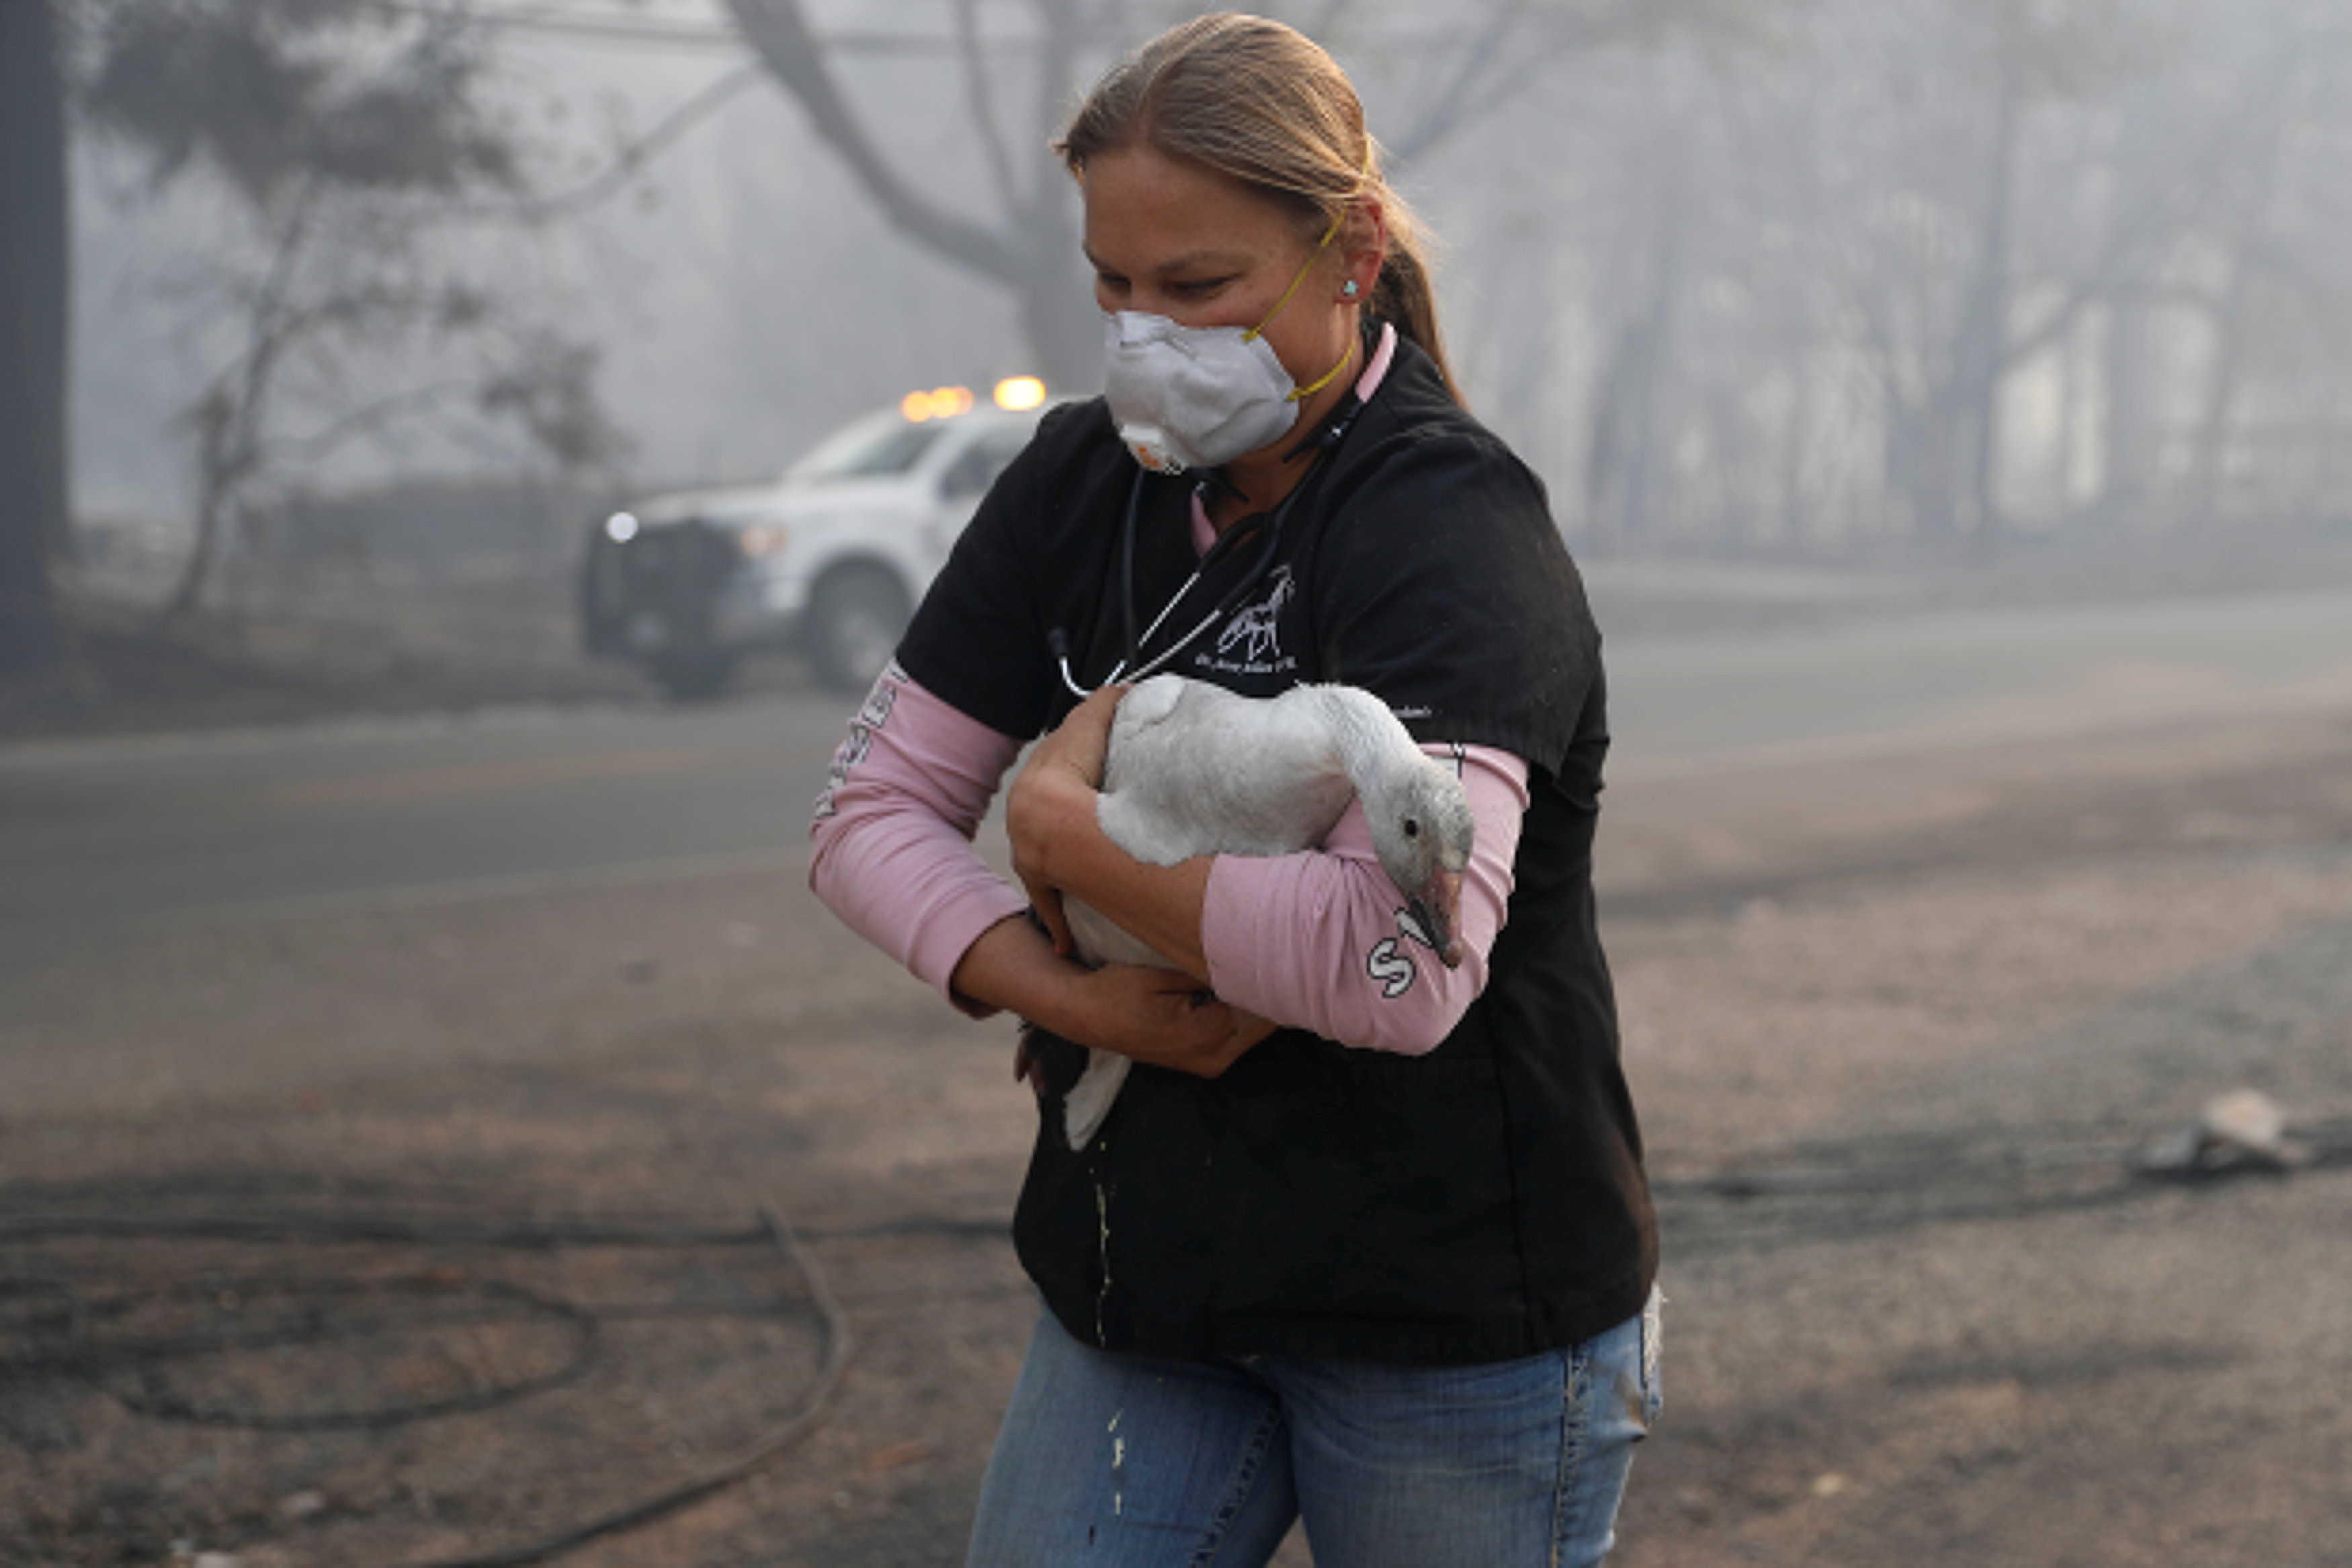 Una mujer salva un ganso del incendio. REUTERS/Stephen Lam